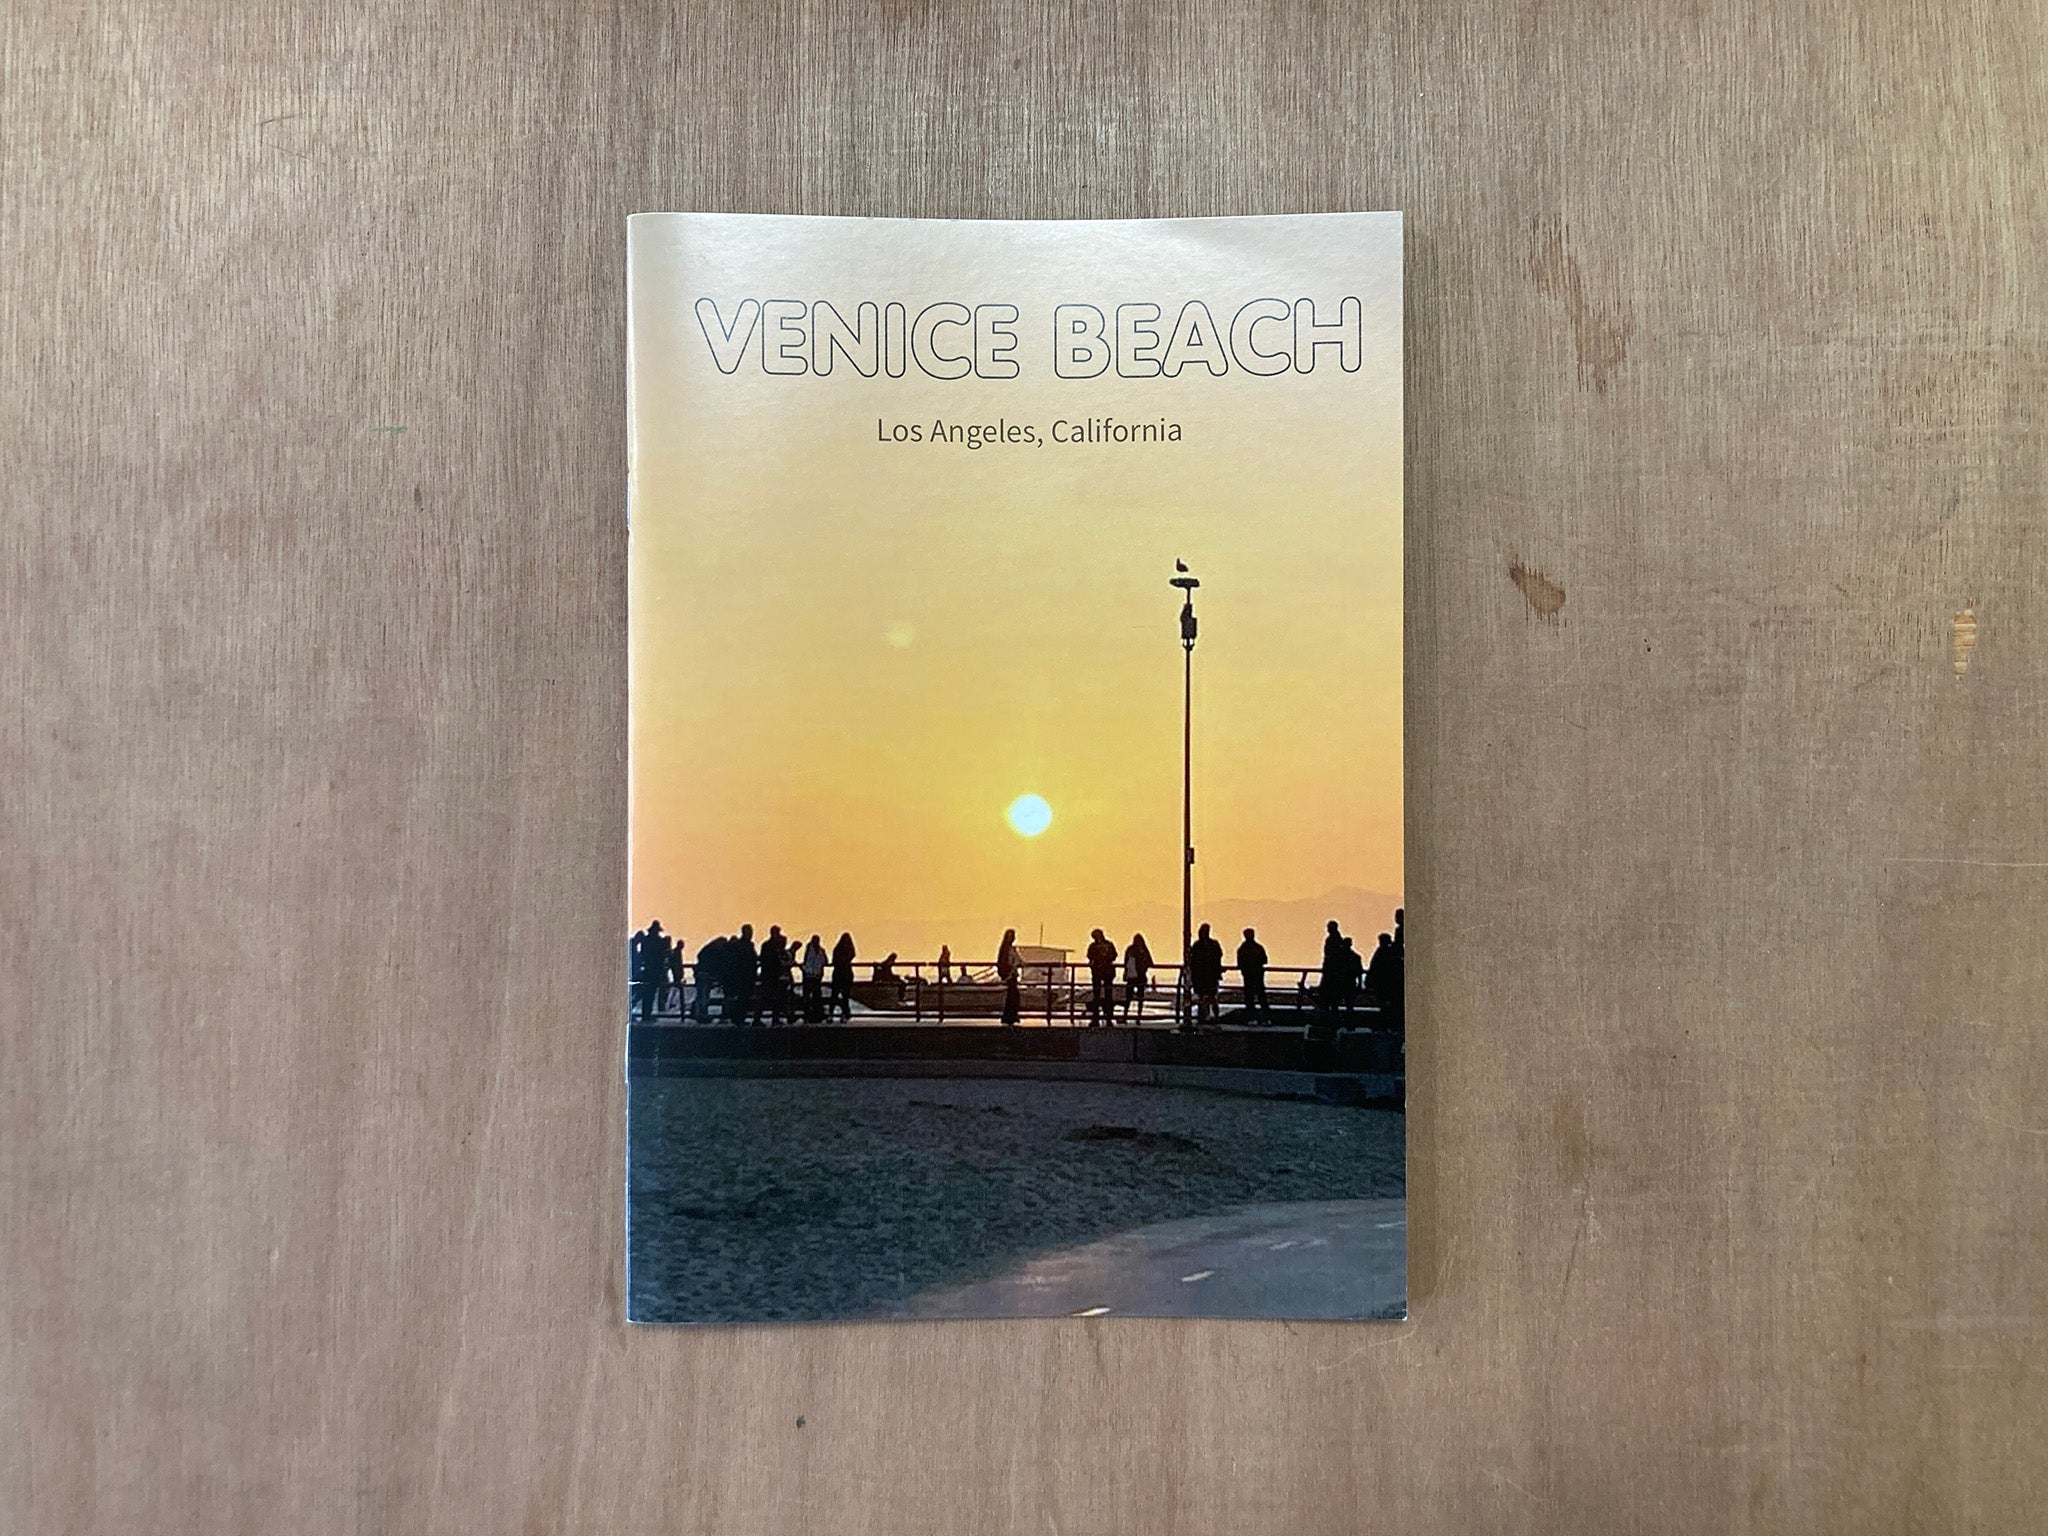 VENICE BEACH, LOS ANGELES, CALIFORNIA by Paul Price